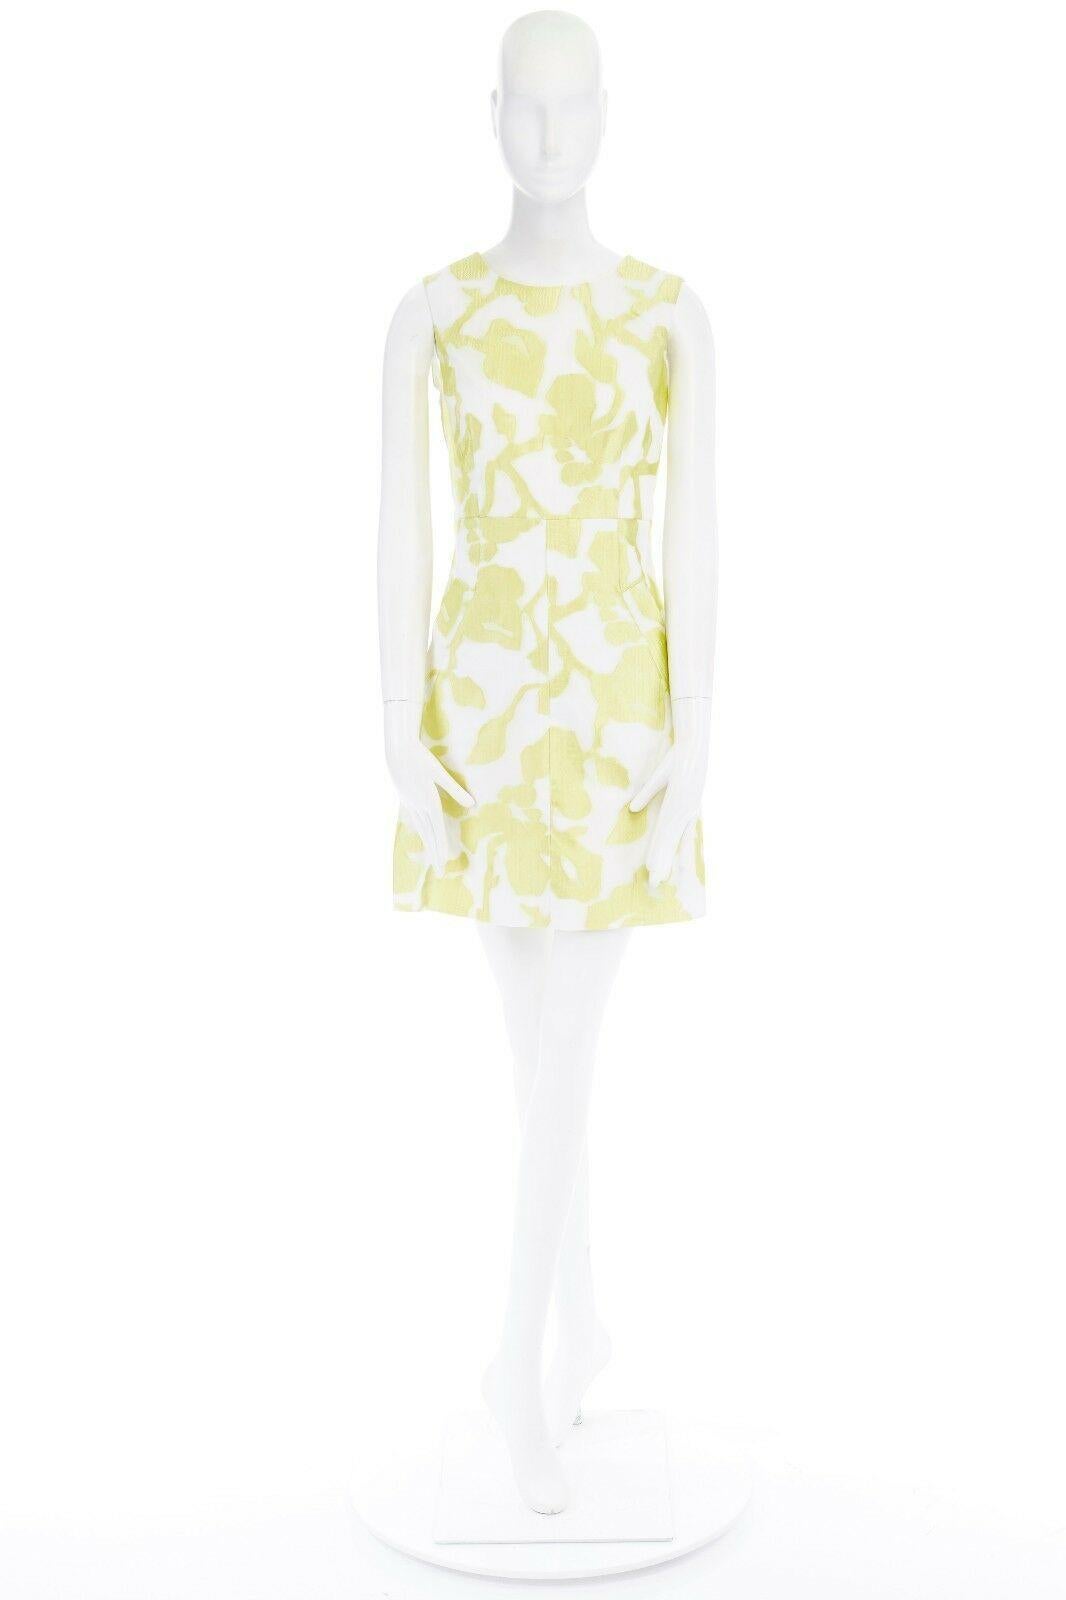 new DIANE VON FURSTERBERG Carpreena white yellow abstract jacquard dress US6 M
DIANE VON FURSTENBERG
